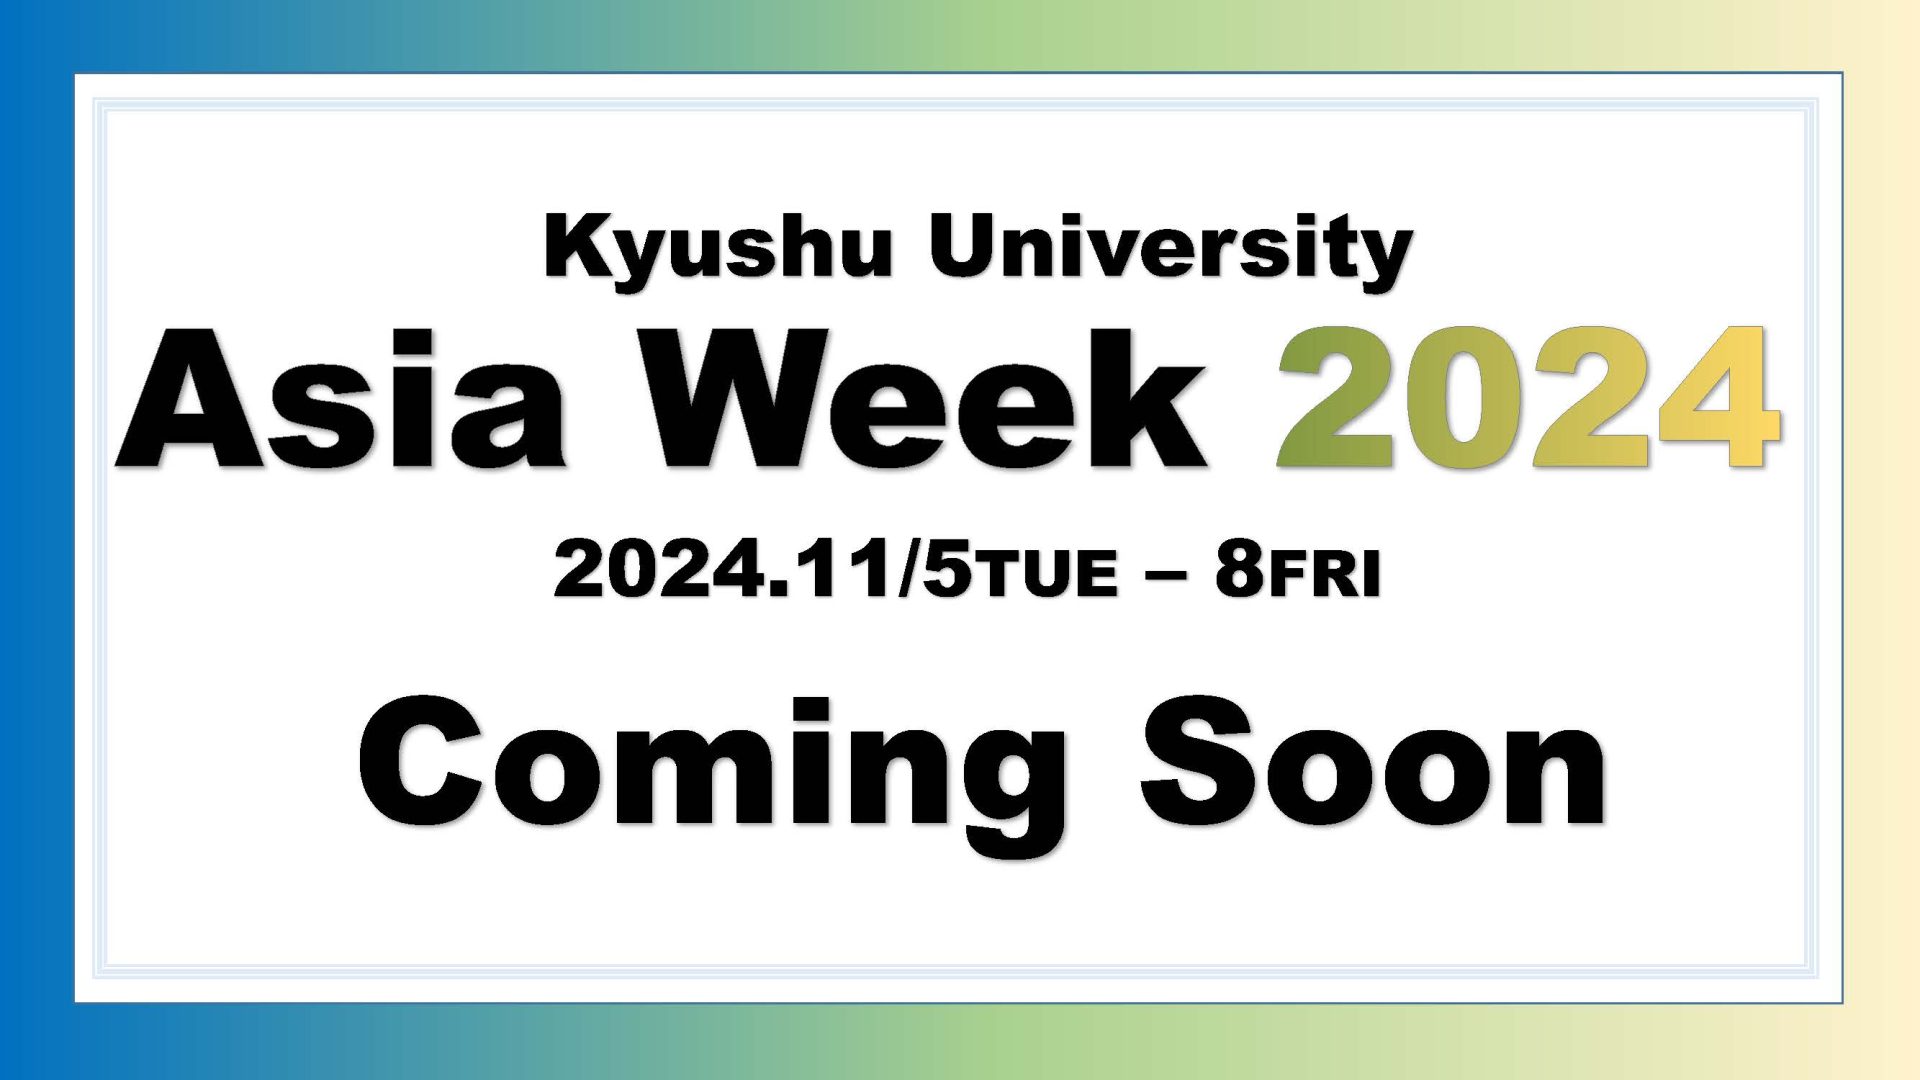 Asia week 2024